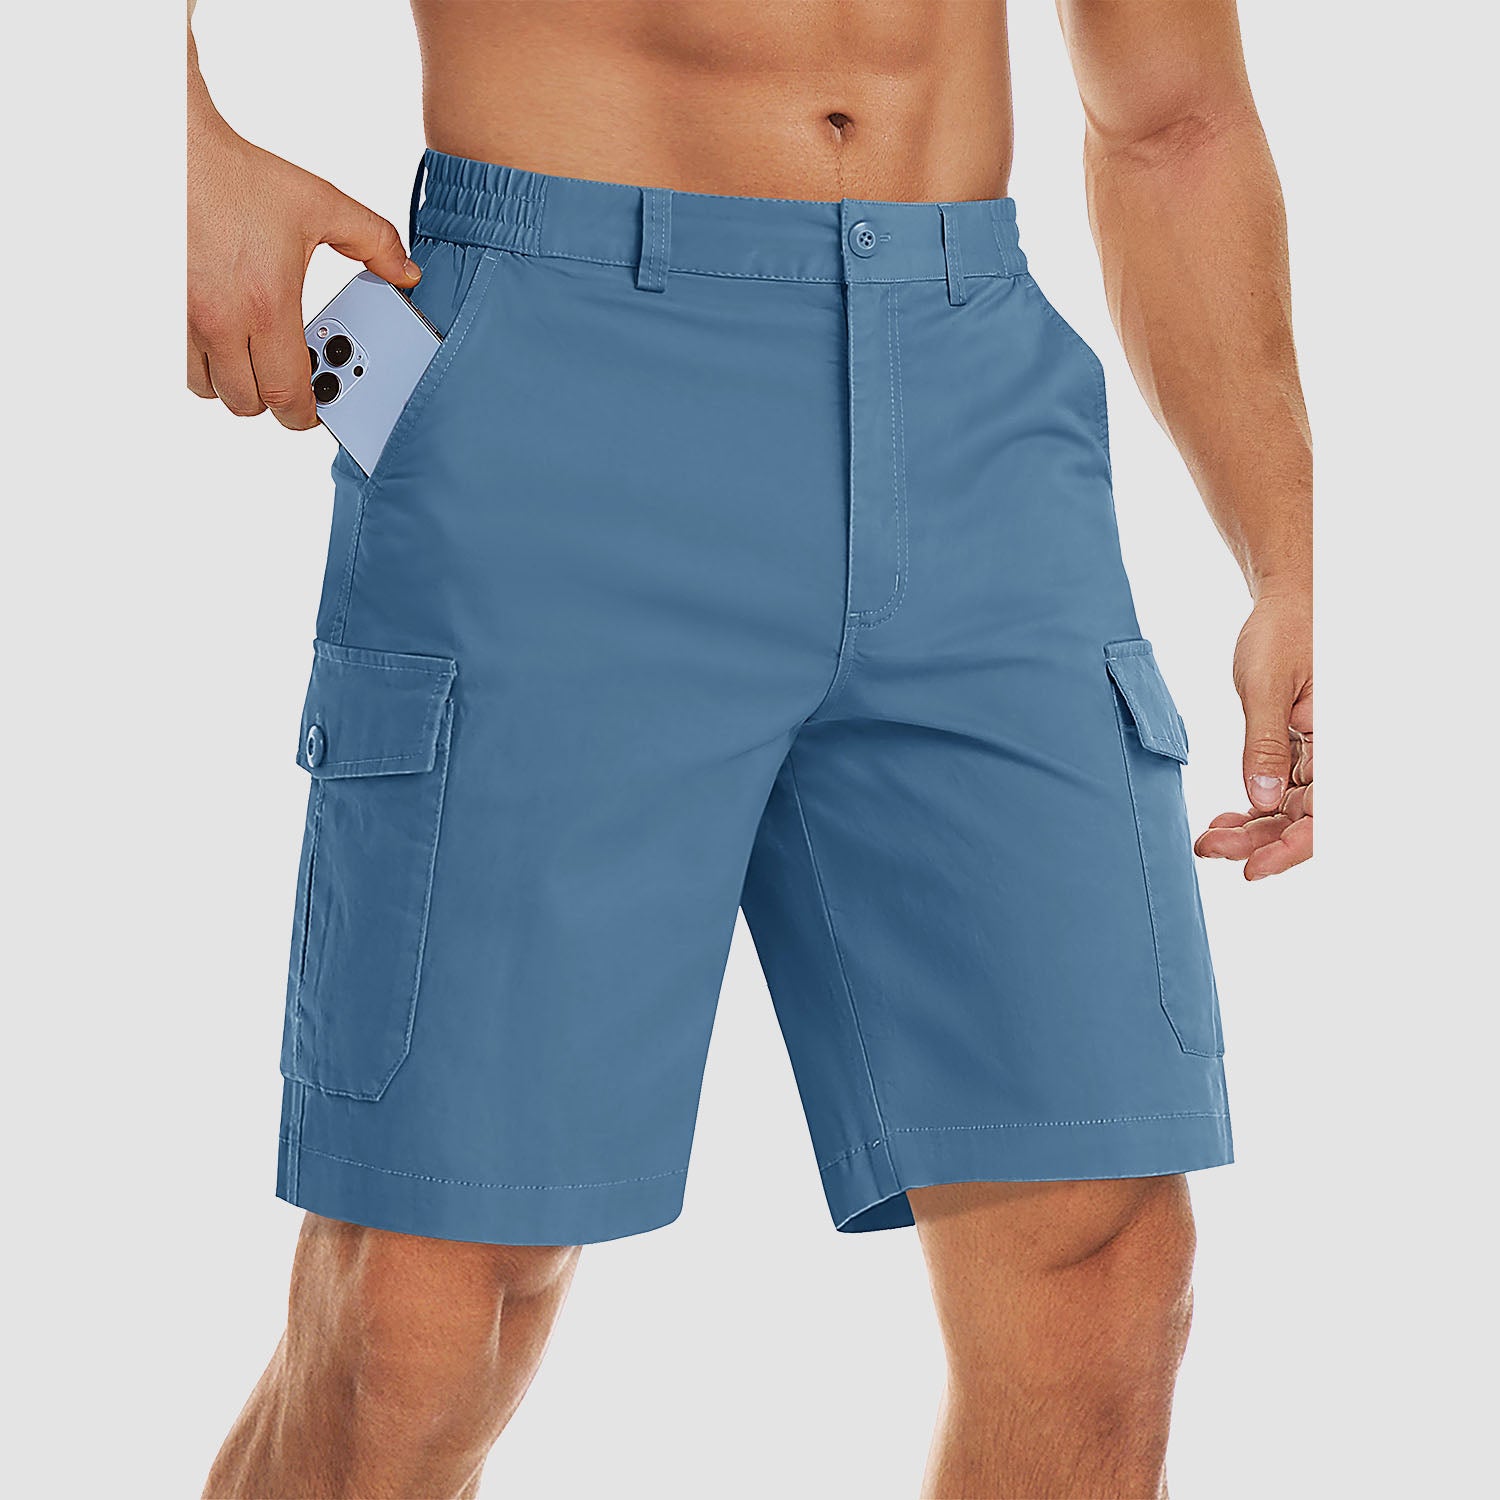 【Buy 4 Get 4th Free】Men's Cargo Shorts Casaul Work Shorts